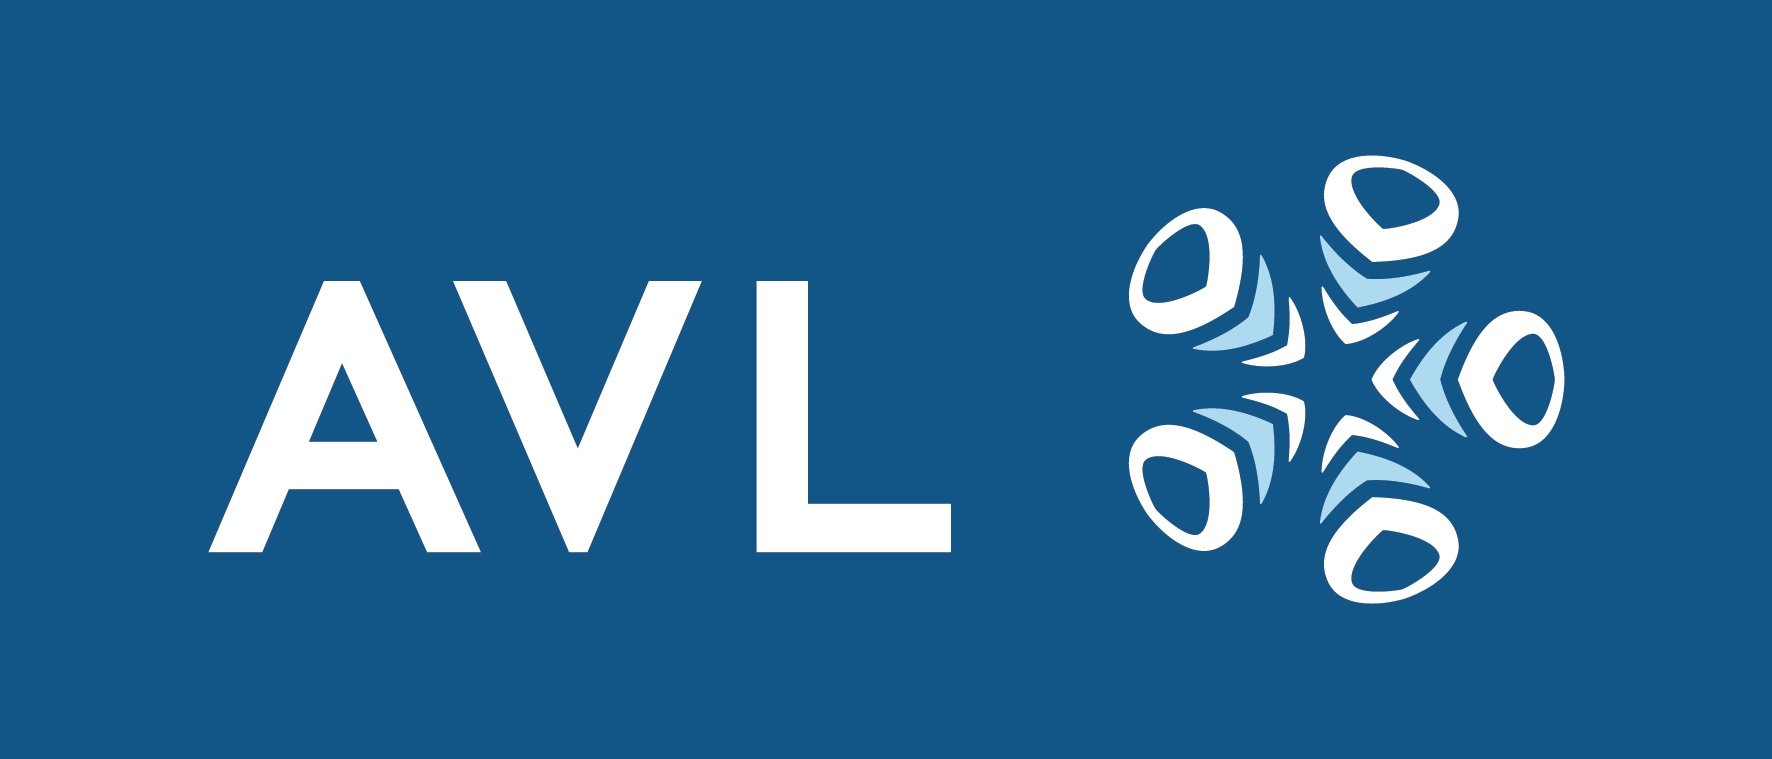 AVL_Logo-1